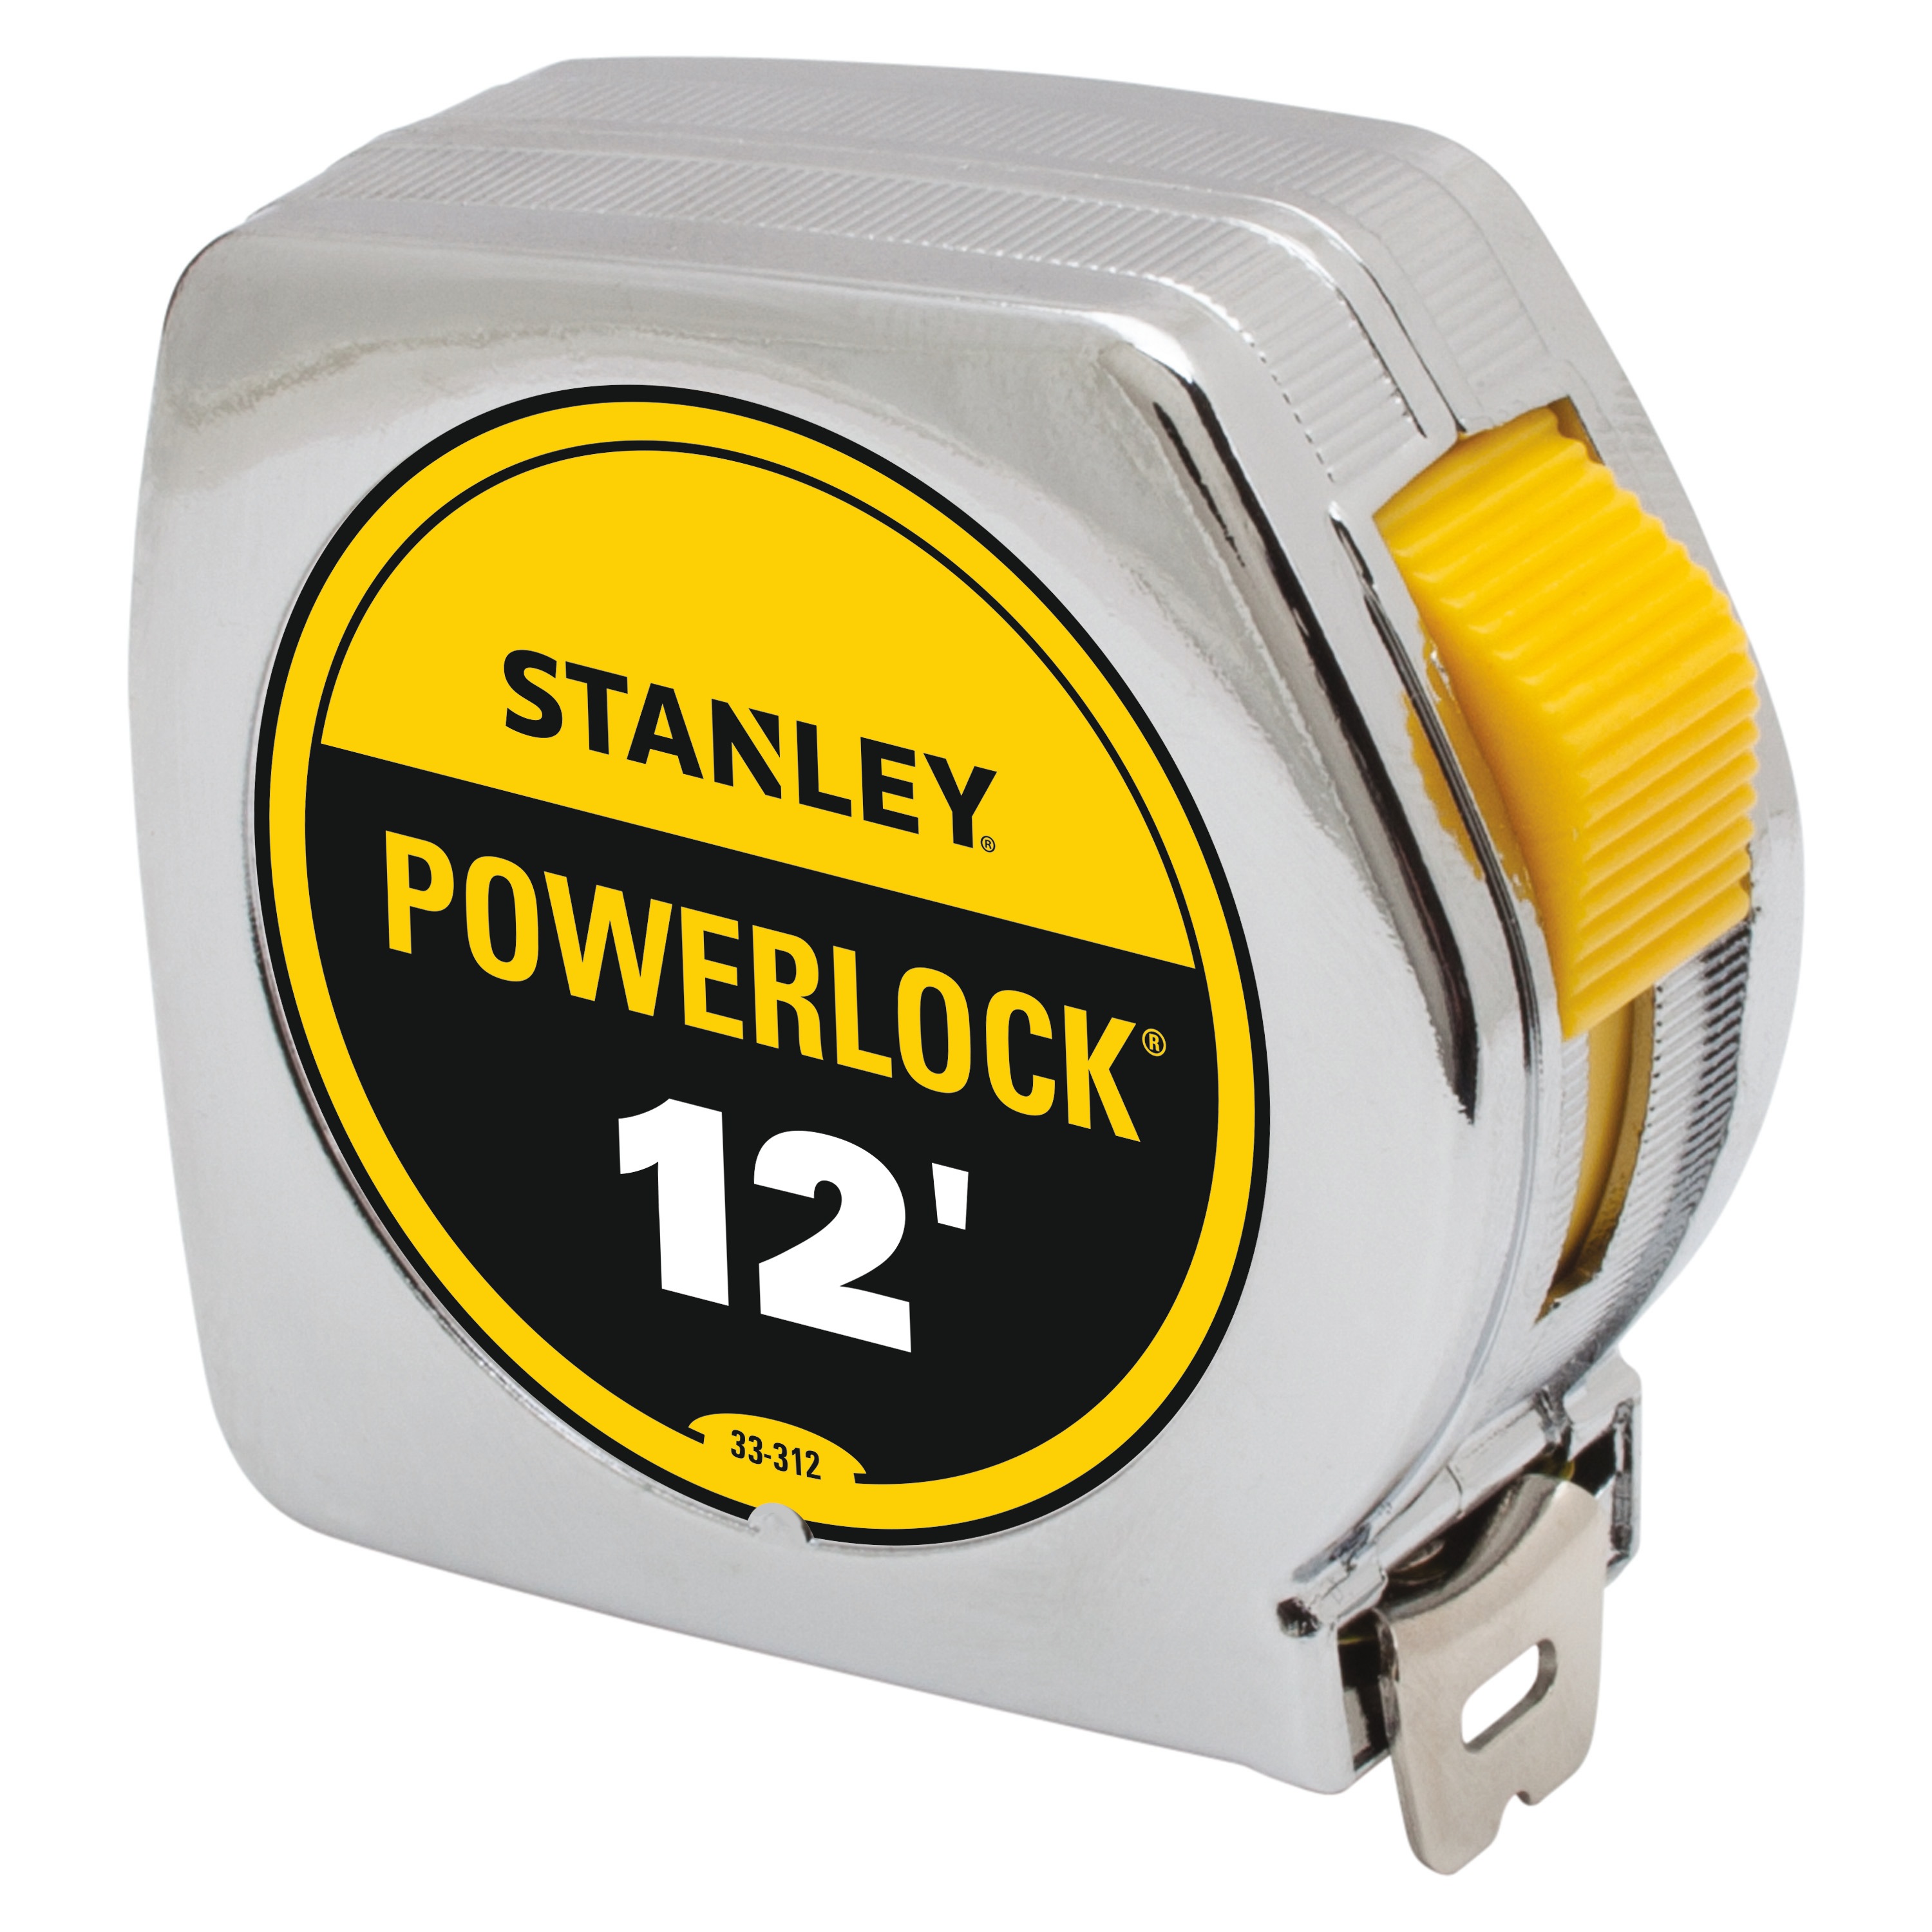 Stanley 33-312 12 Powerlock Tape Rule